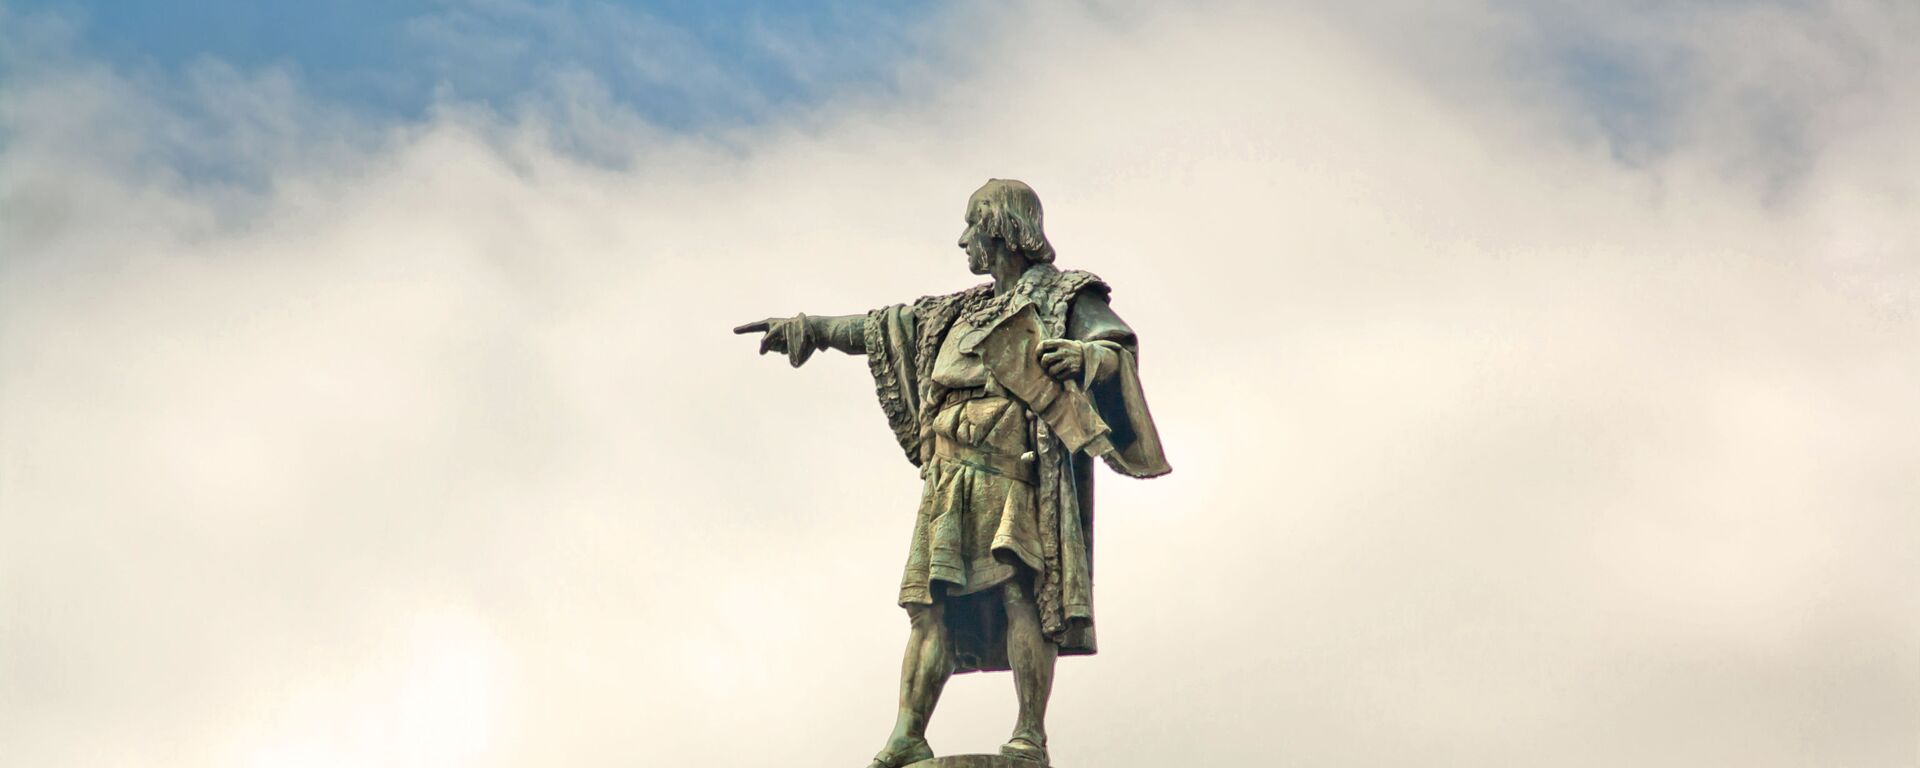 El monumento de Cristóbal Colón en Barcelona, España - Sputnik Mundo, 1920, 11.10.2021